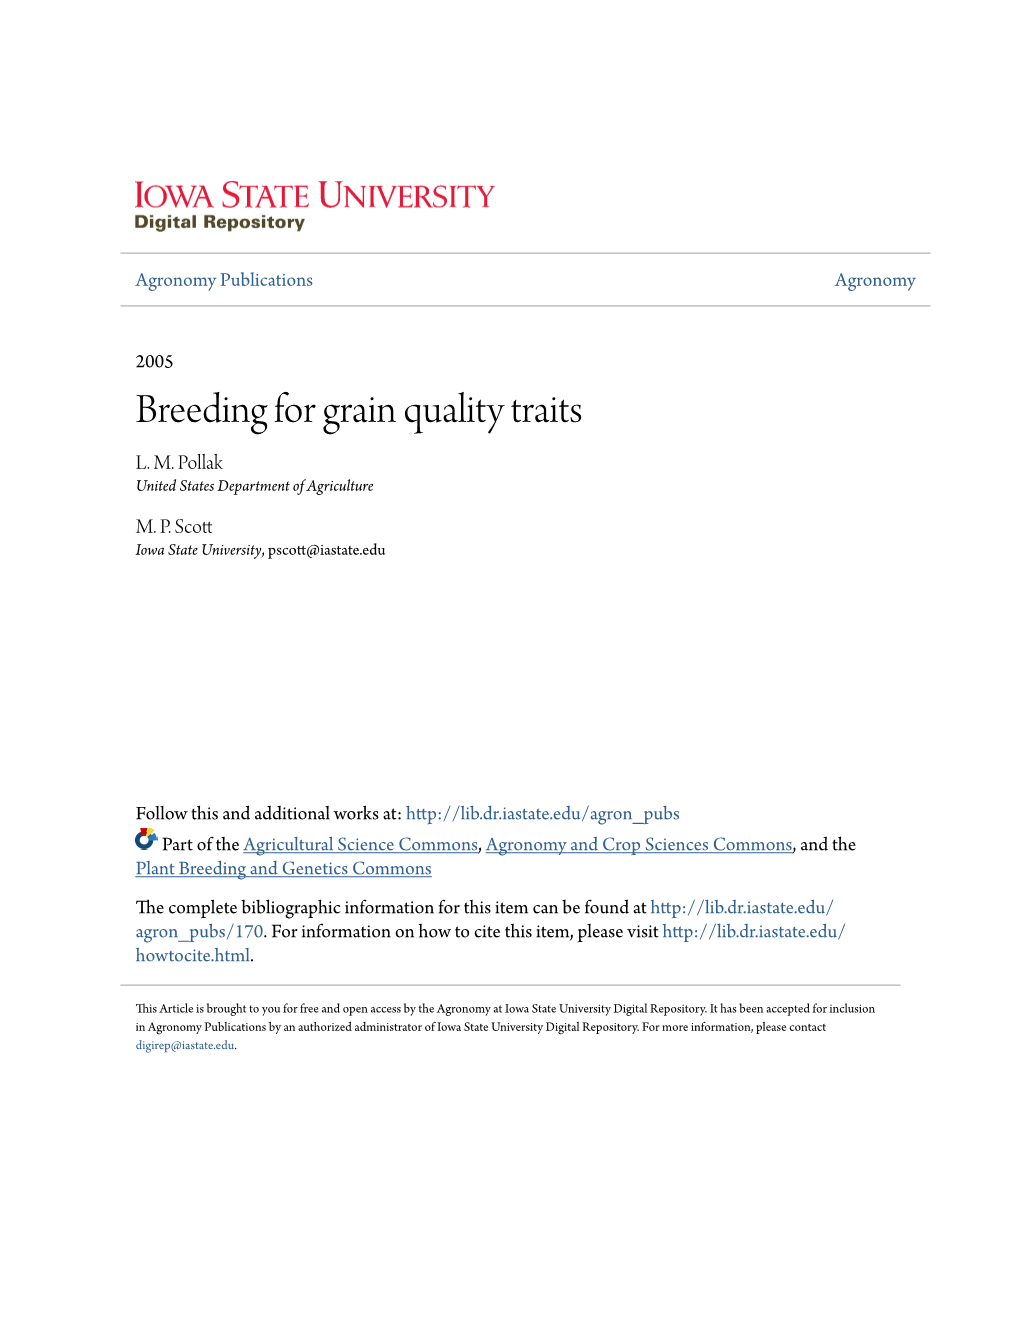 Breeding for Grain Quality Traits L